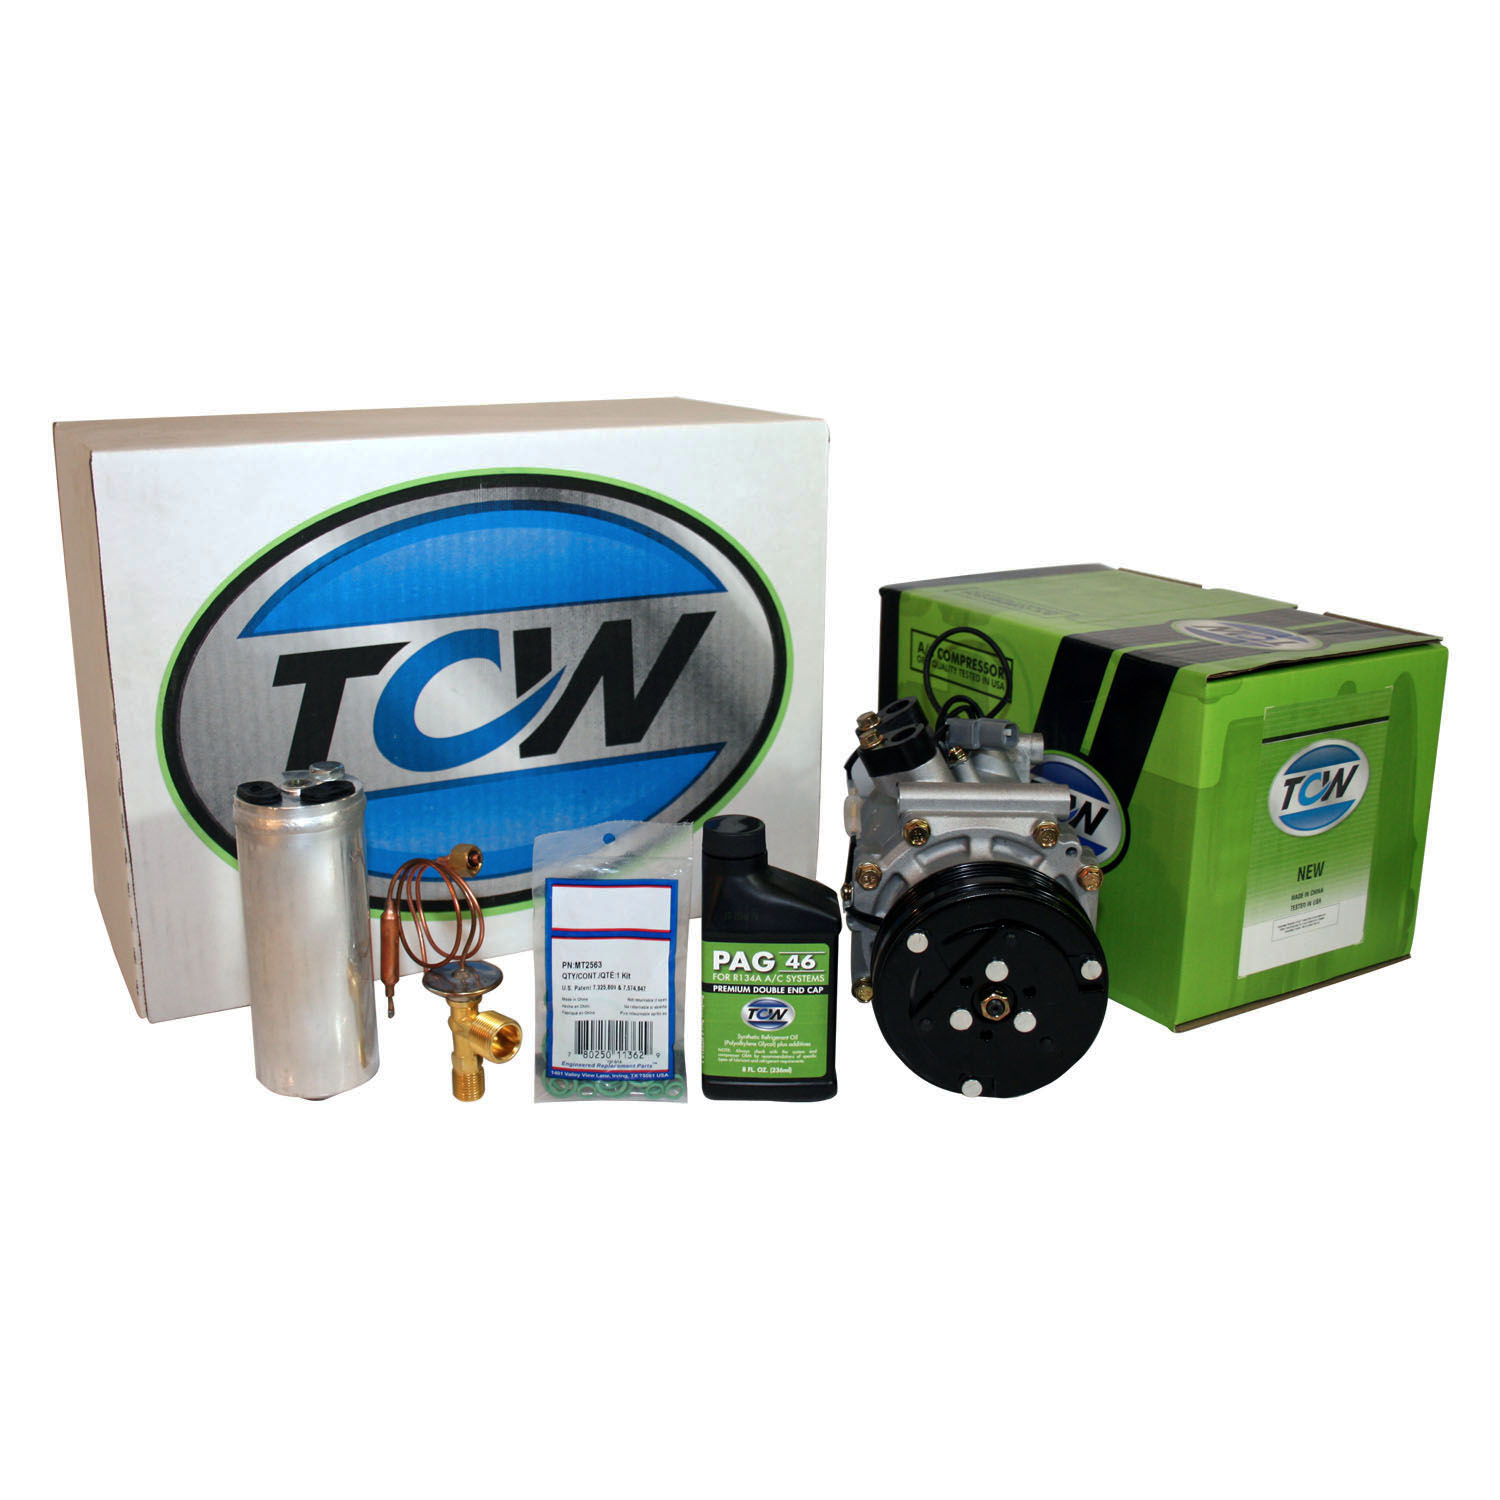 TCW Vehicle A/C Kit K1000307N New Product Image field_60b6a13a6e67c